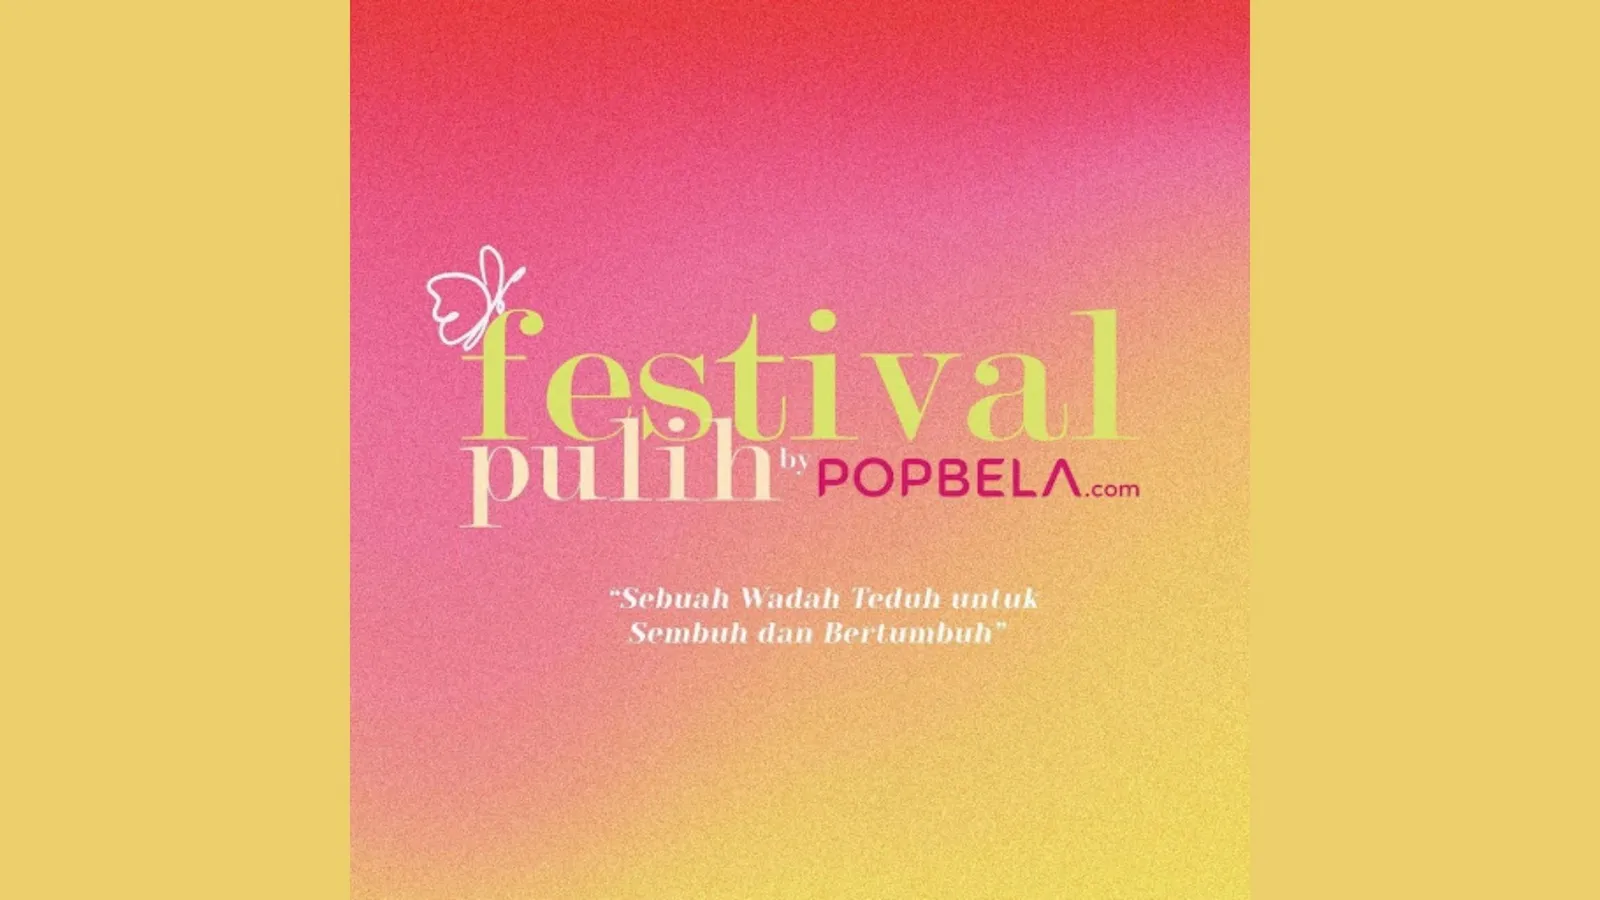 Bangkit dari Kegagalan, Popbela.com Hadirkan Festival Pulih